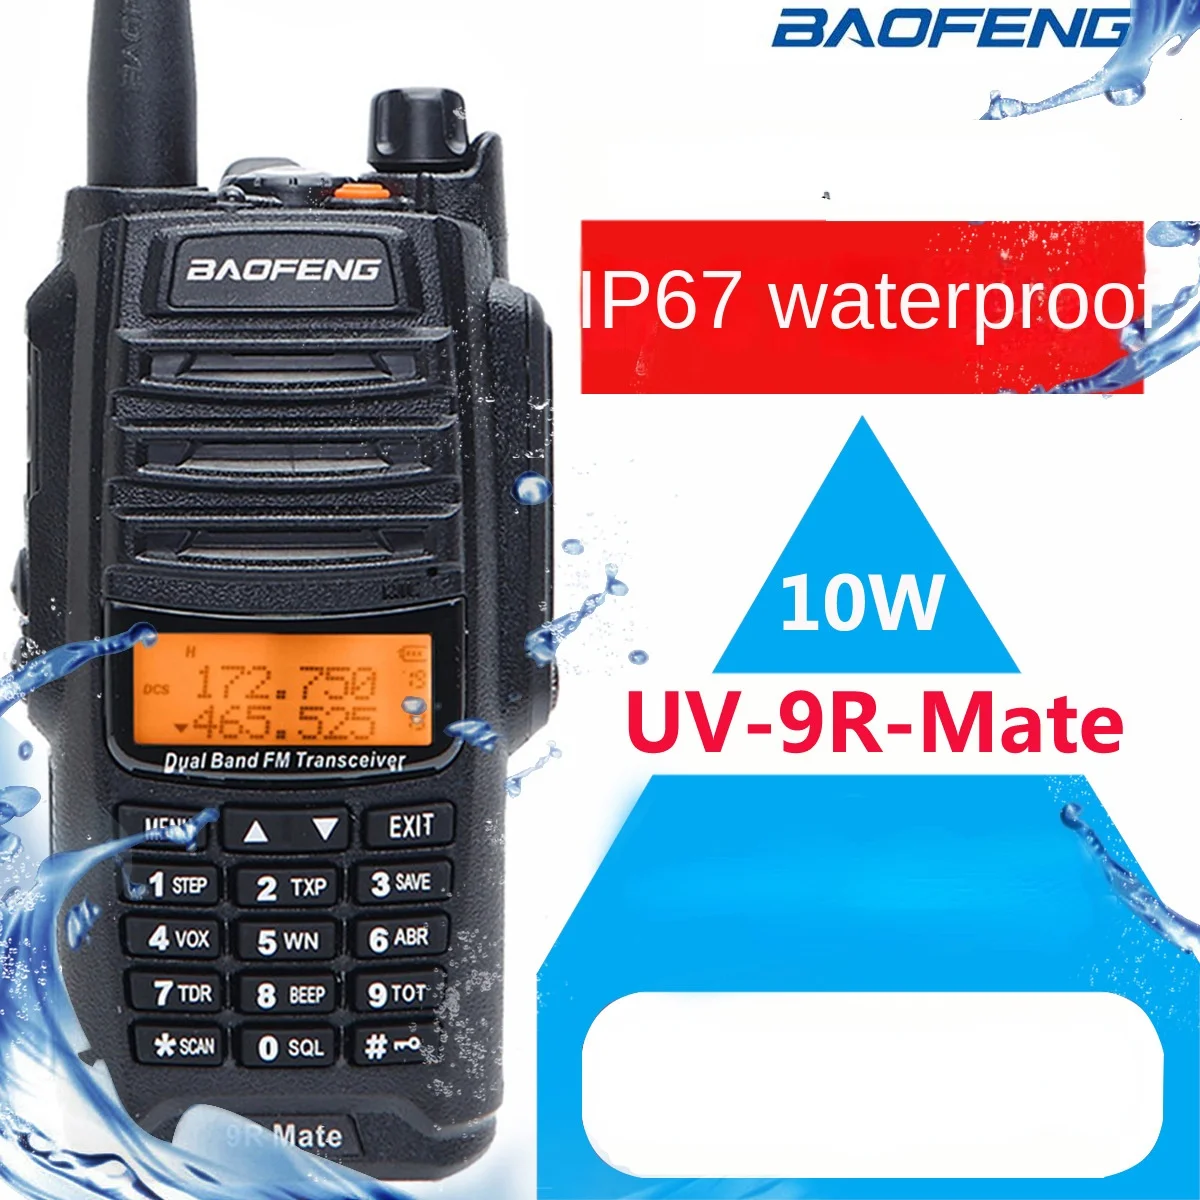 Baofeng Walkie Talkie Uv-9r Mate 10W High-power Dual Band FM Handheld